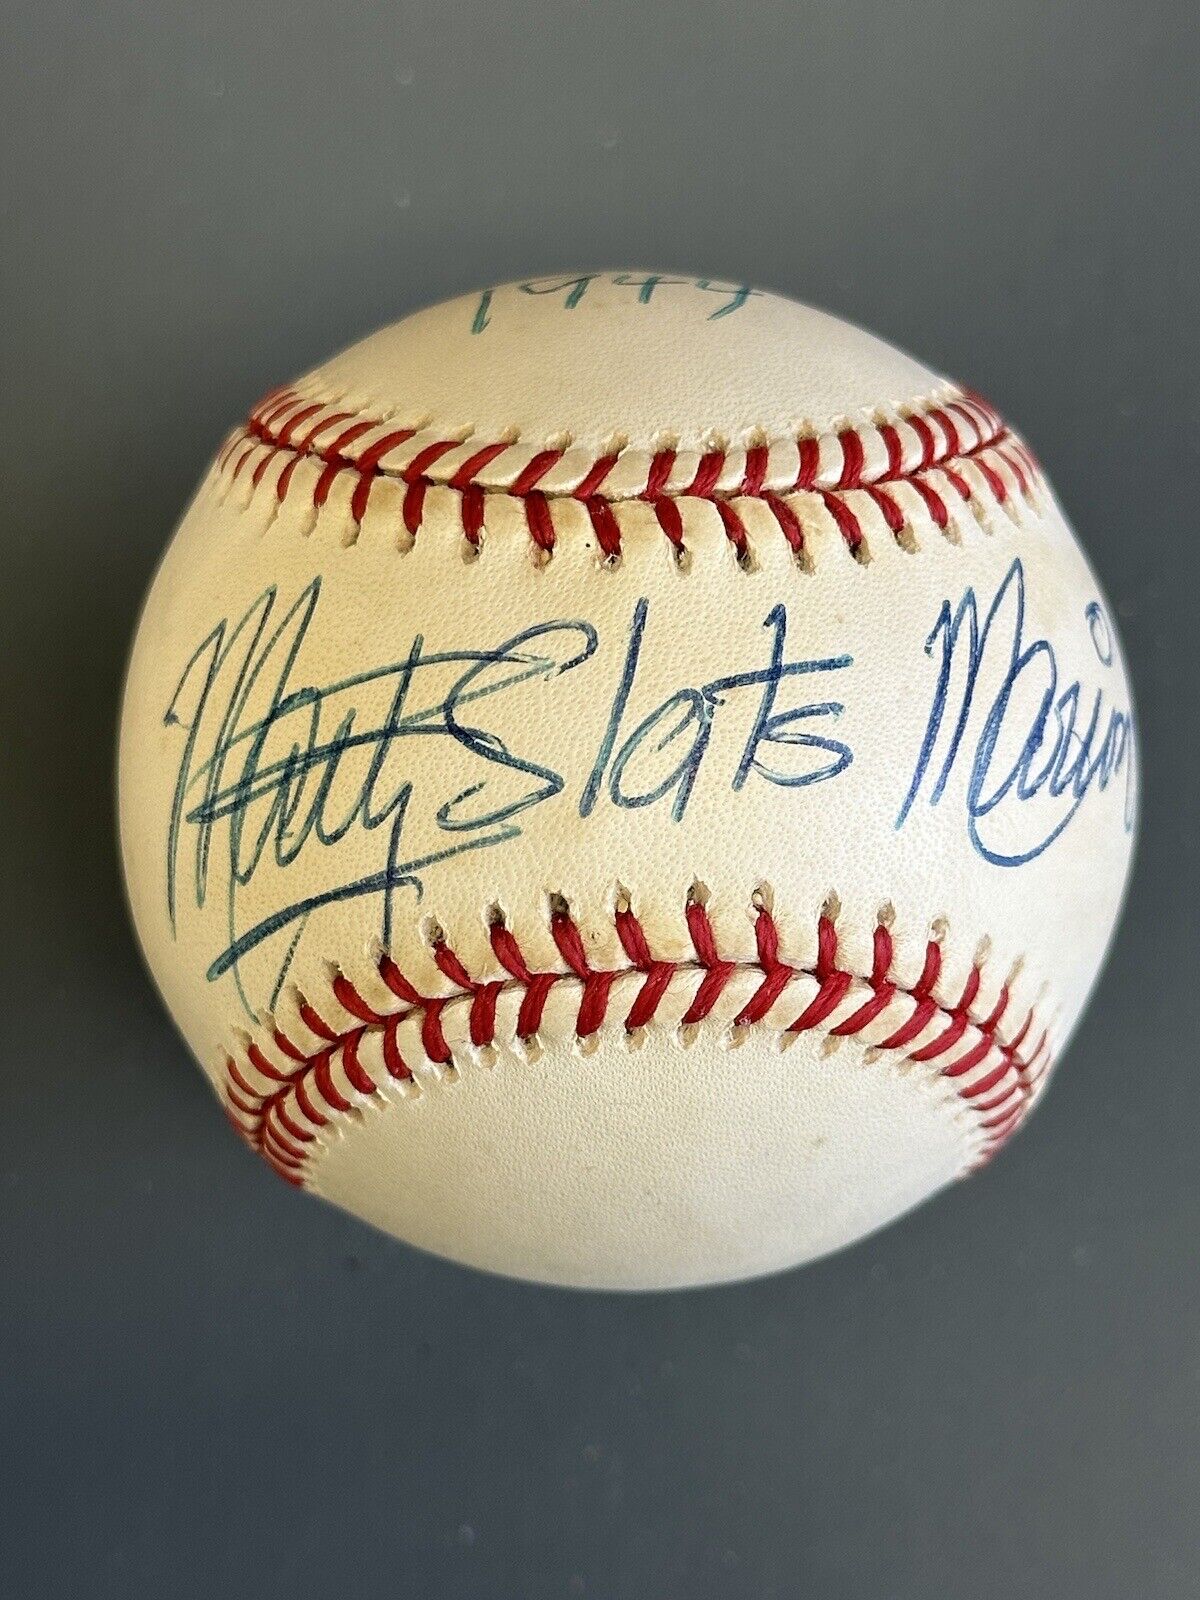 Marty Slats Marion NL MVP 1944 SIGNED Official NL Coleman Baseball w/ hologram